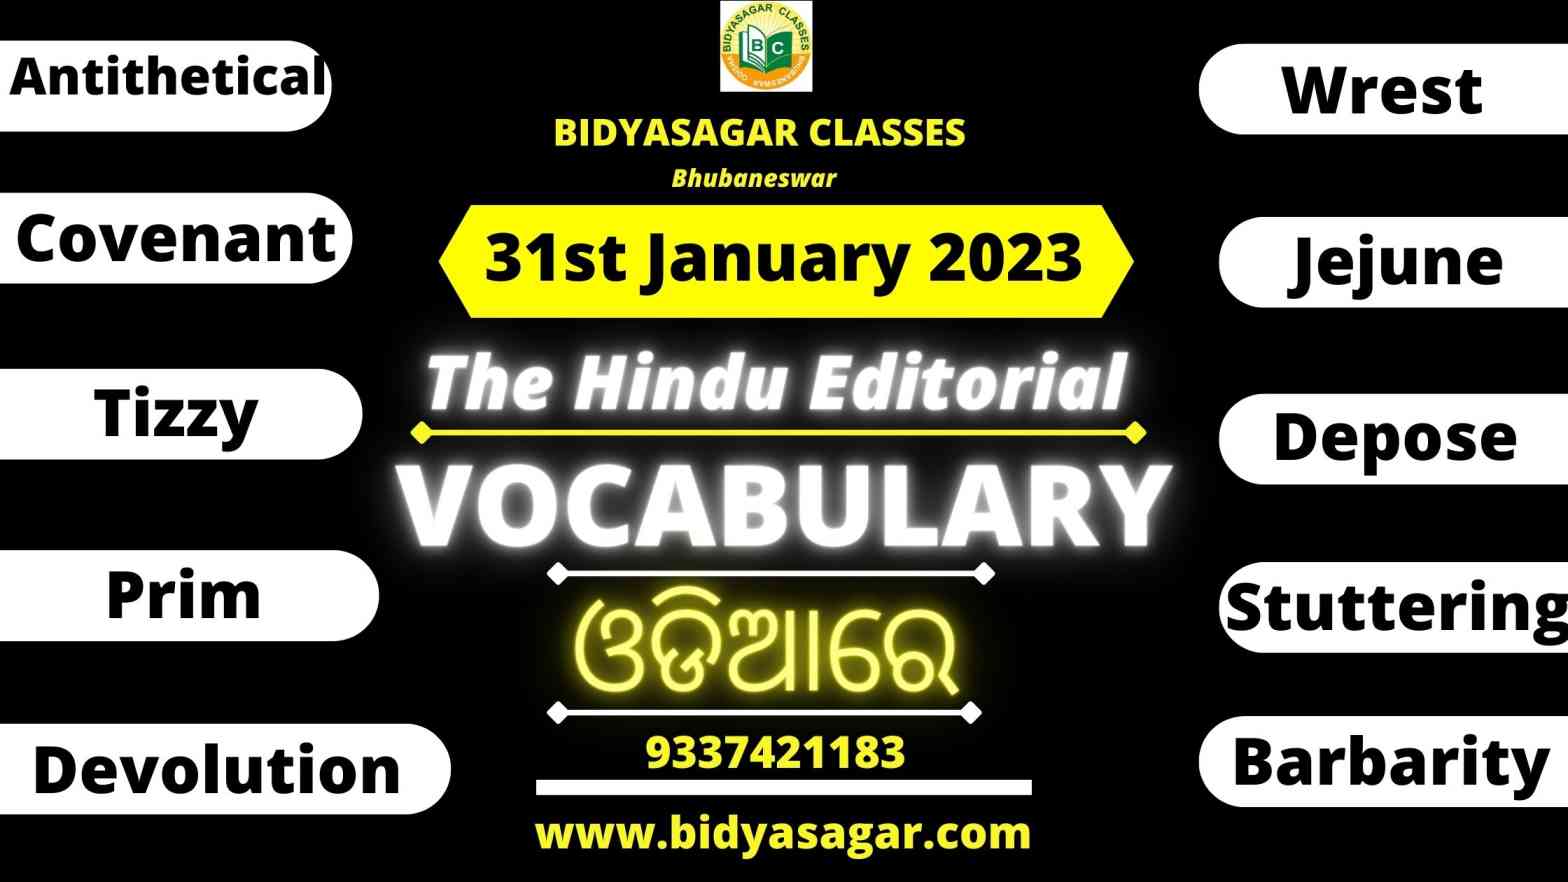 The Hindu Editorial Vocabulary of 31st January 2023